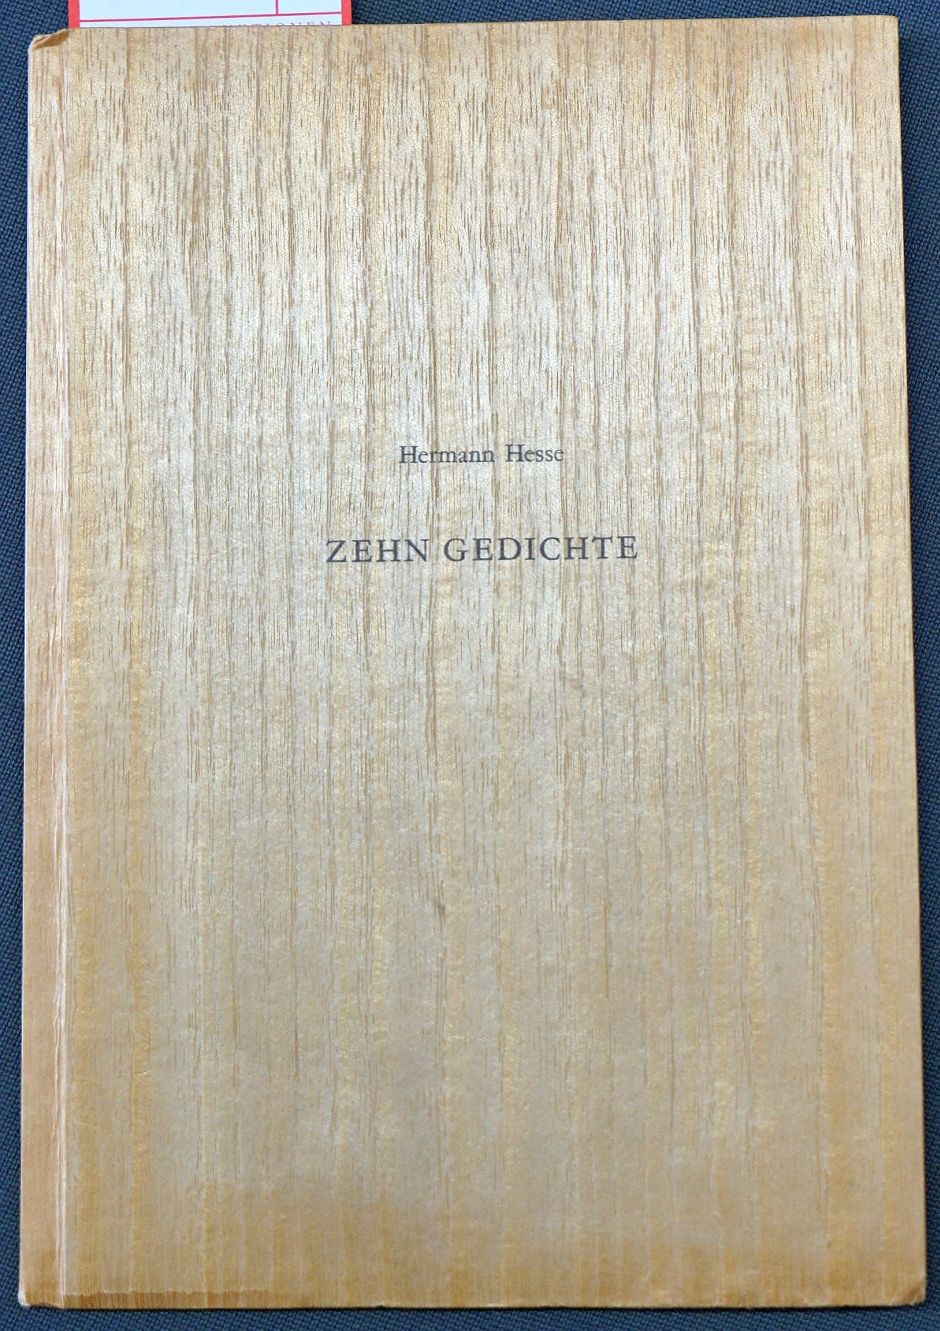 Lot 3188, Auction  115, Hesse, Hermann, Zehn Gedichte